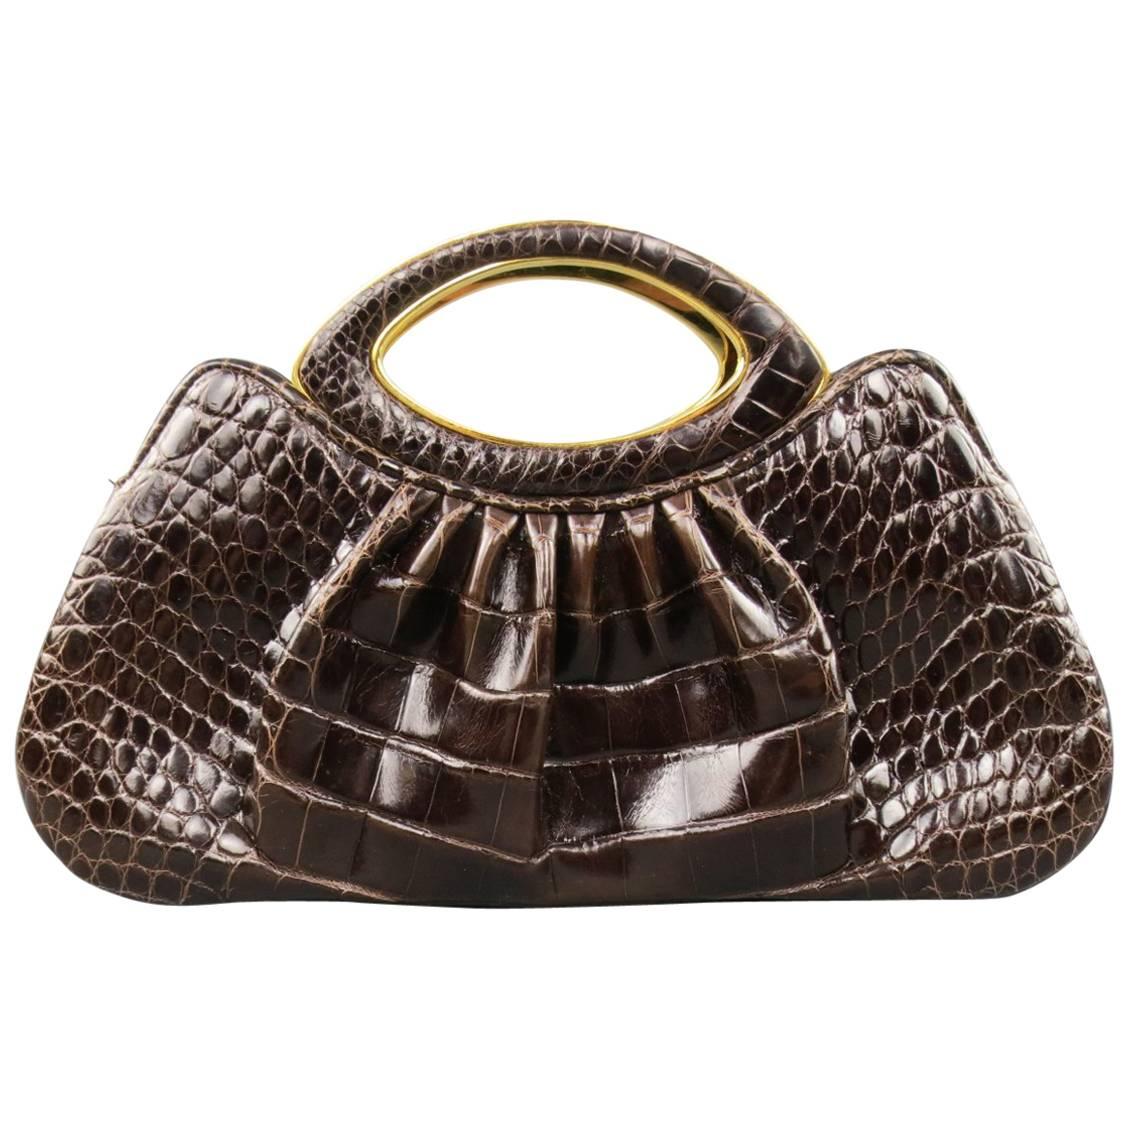 Judith Leiber Handbag - Brown Gold Alligator Leather Evening Bag